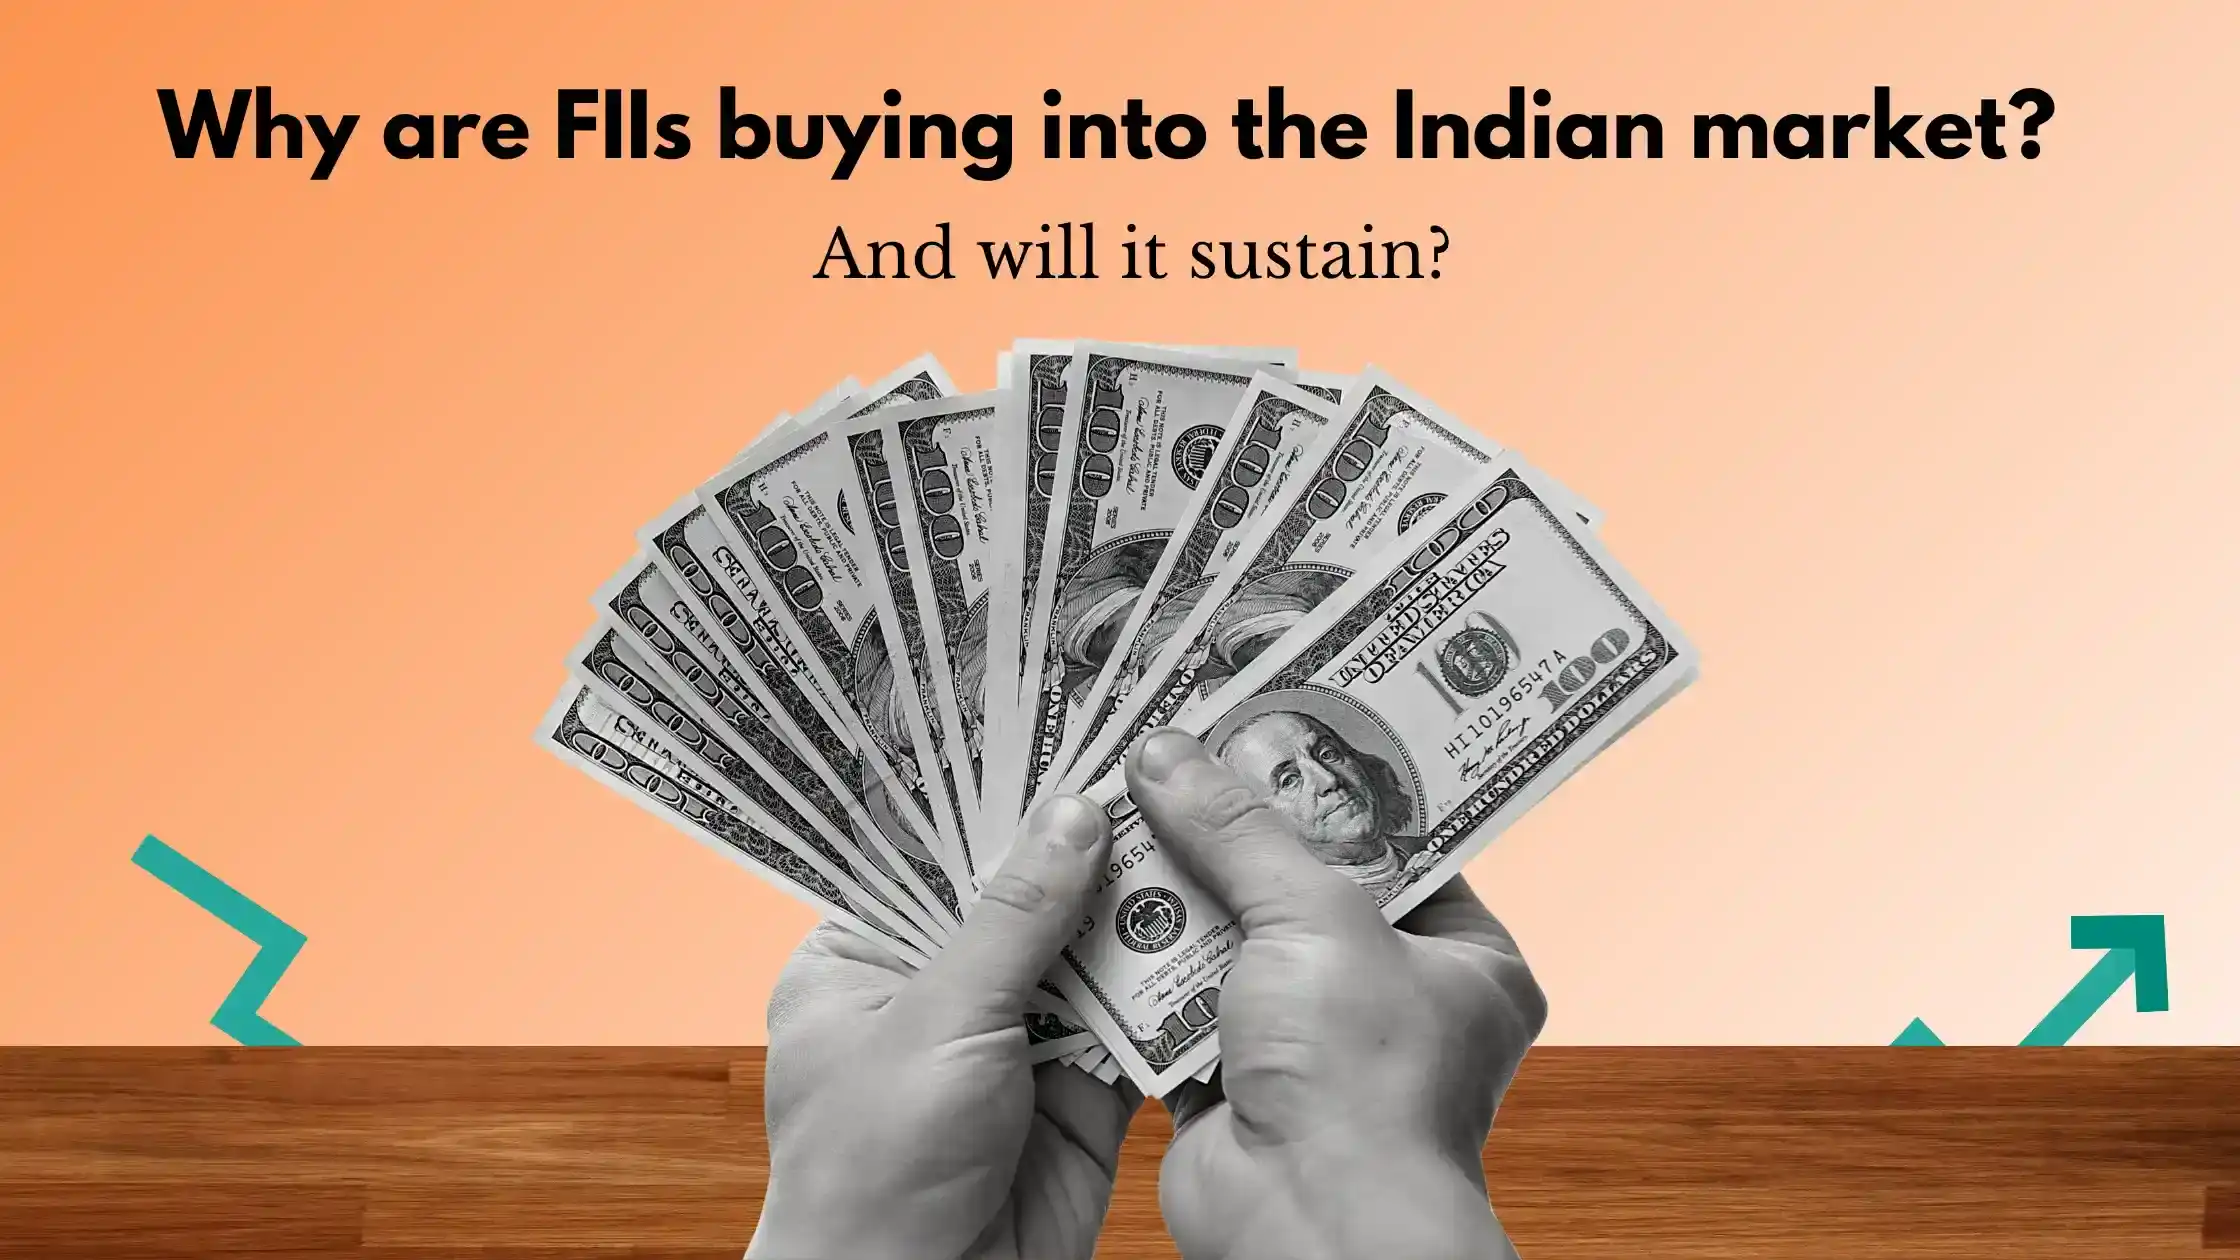 FIIs buying into the Indian market